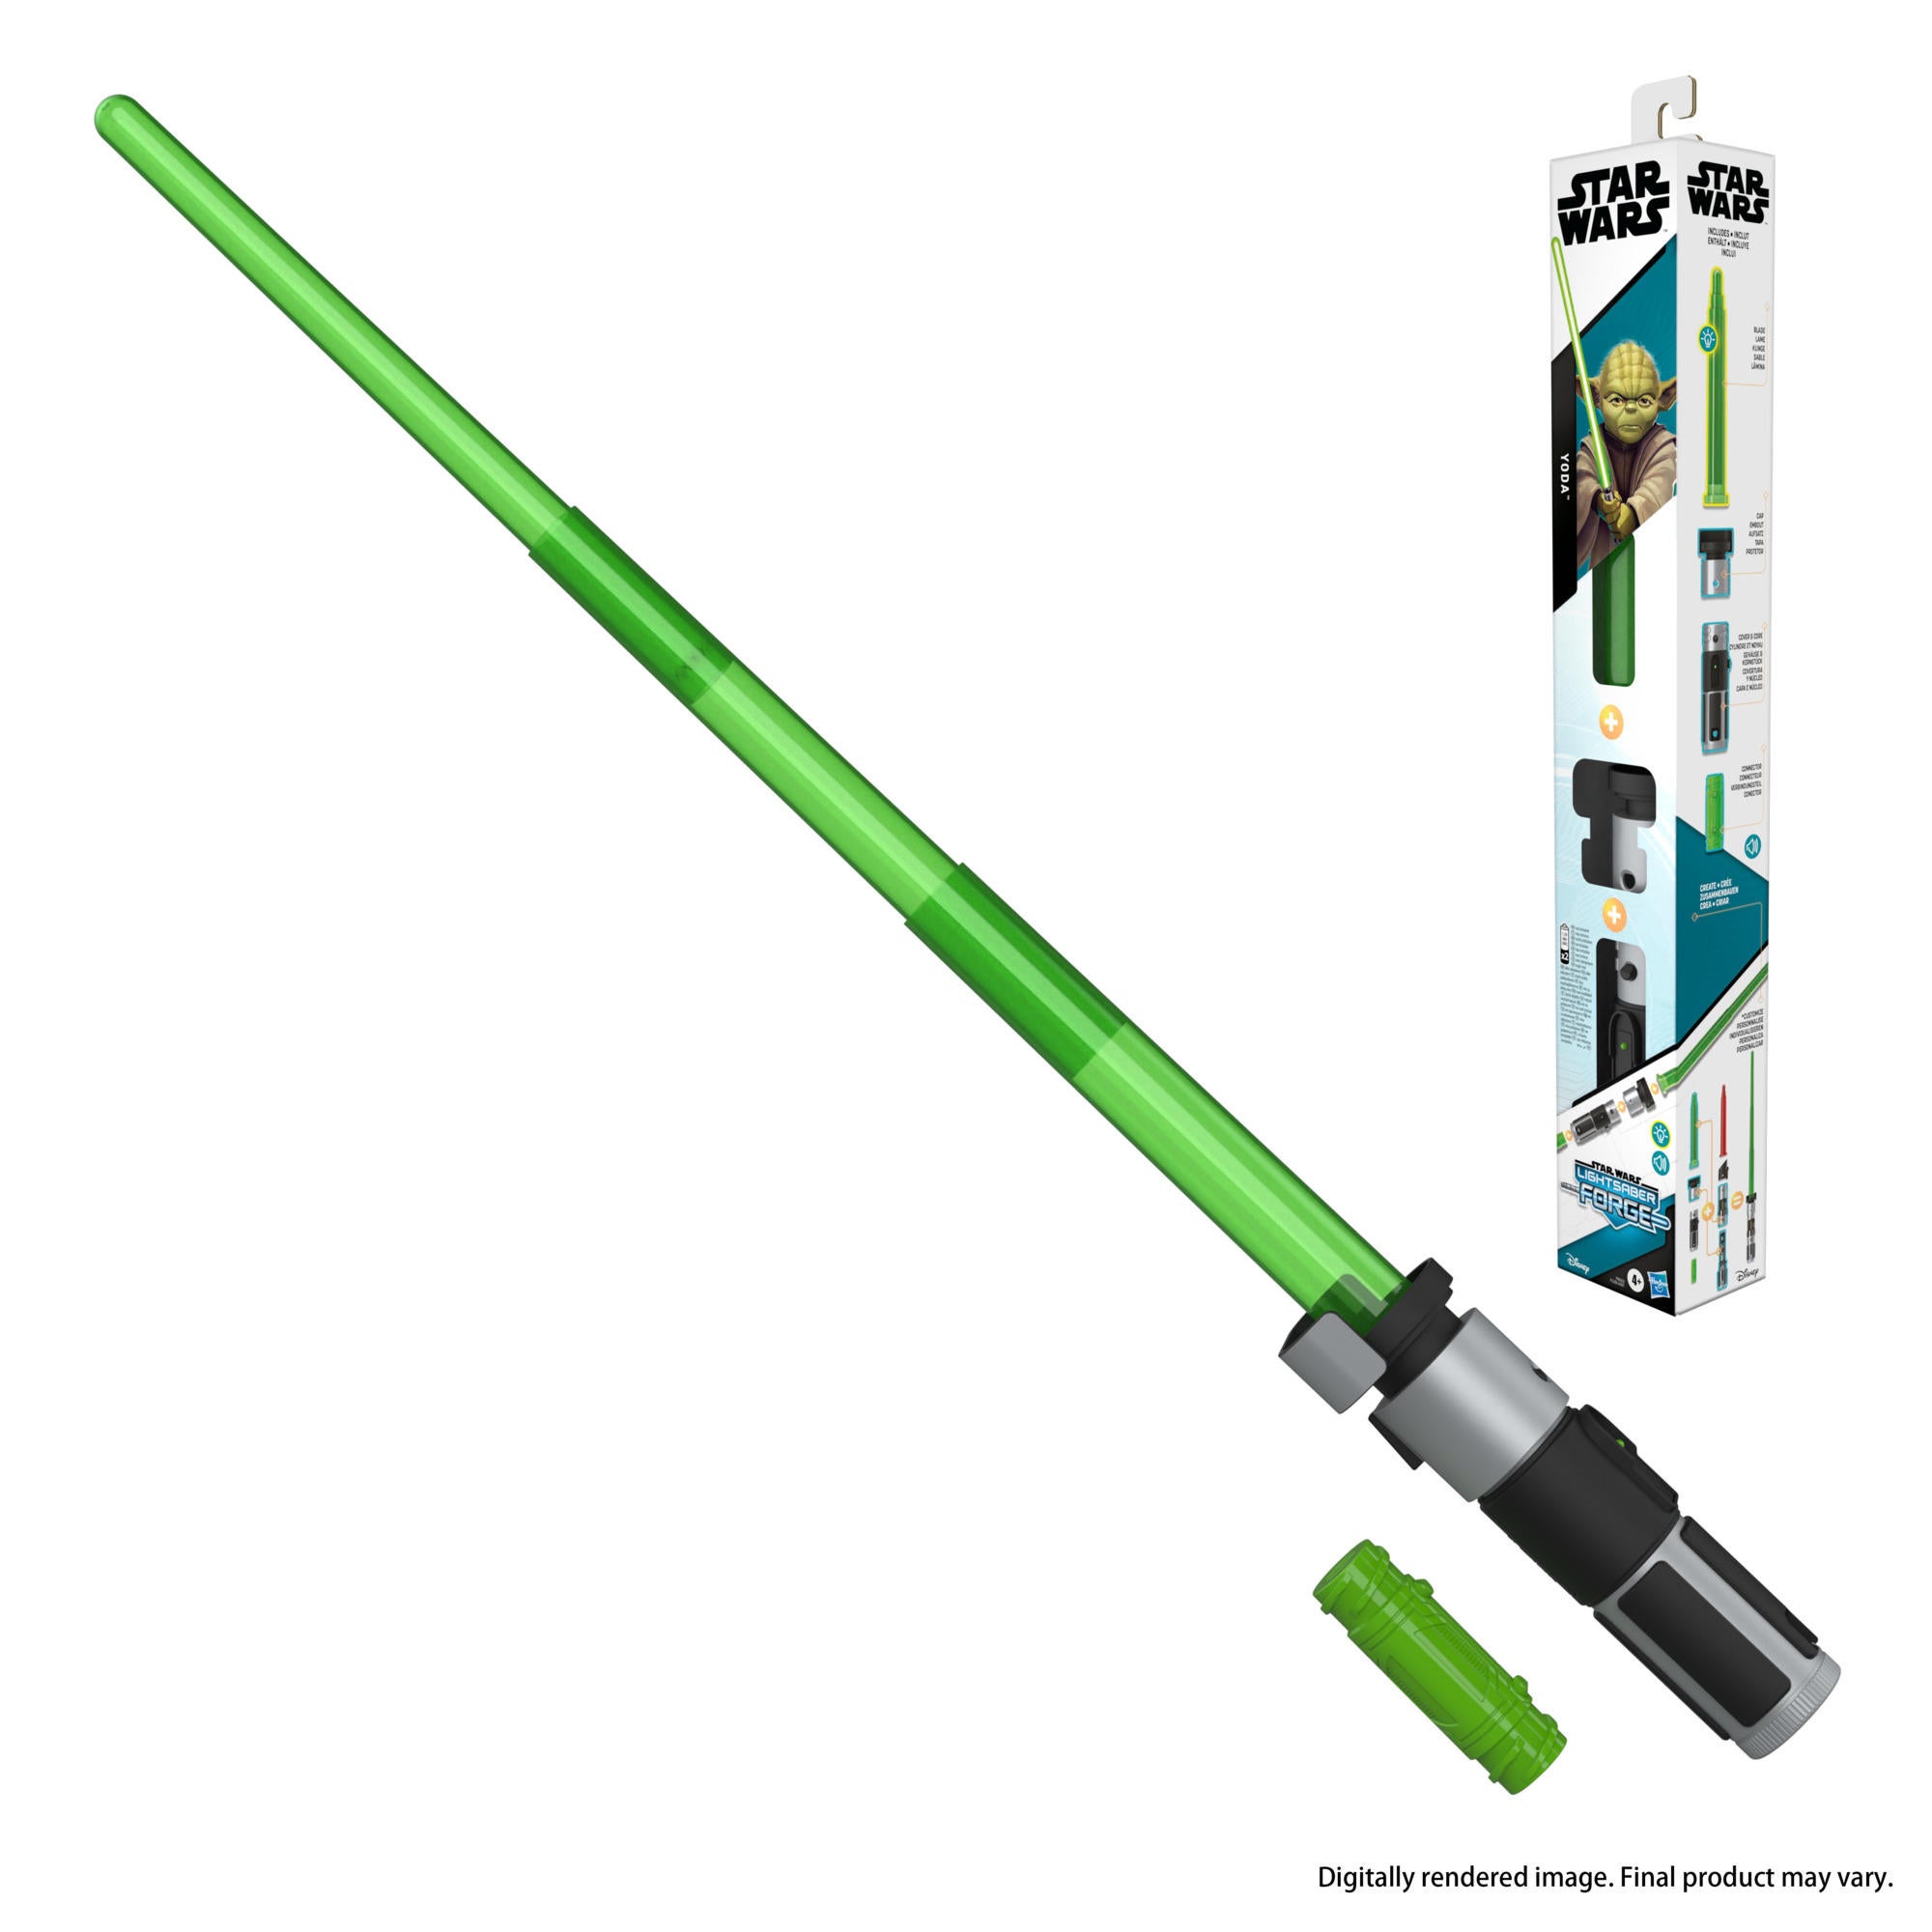 star-wars-lightsaber-forge-yoda-electronic-green-lightsaber-4.jpg